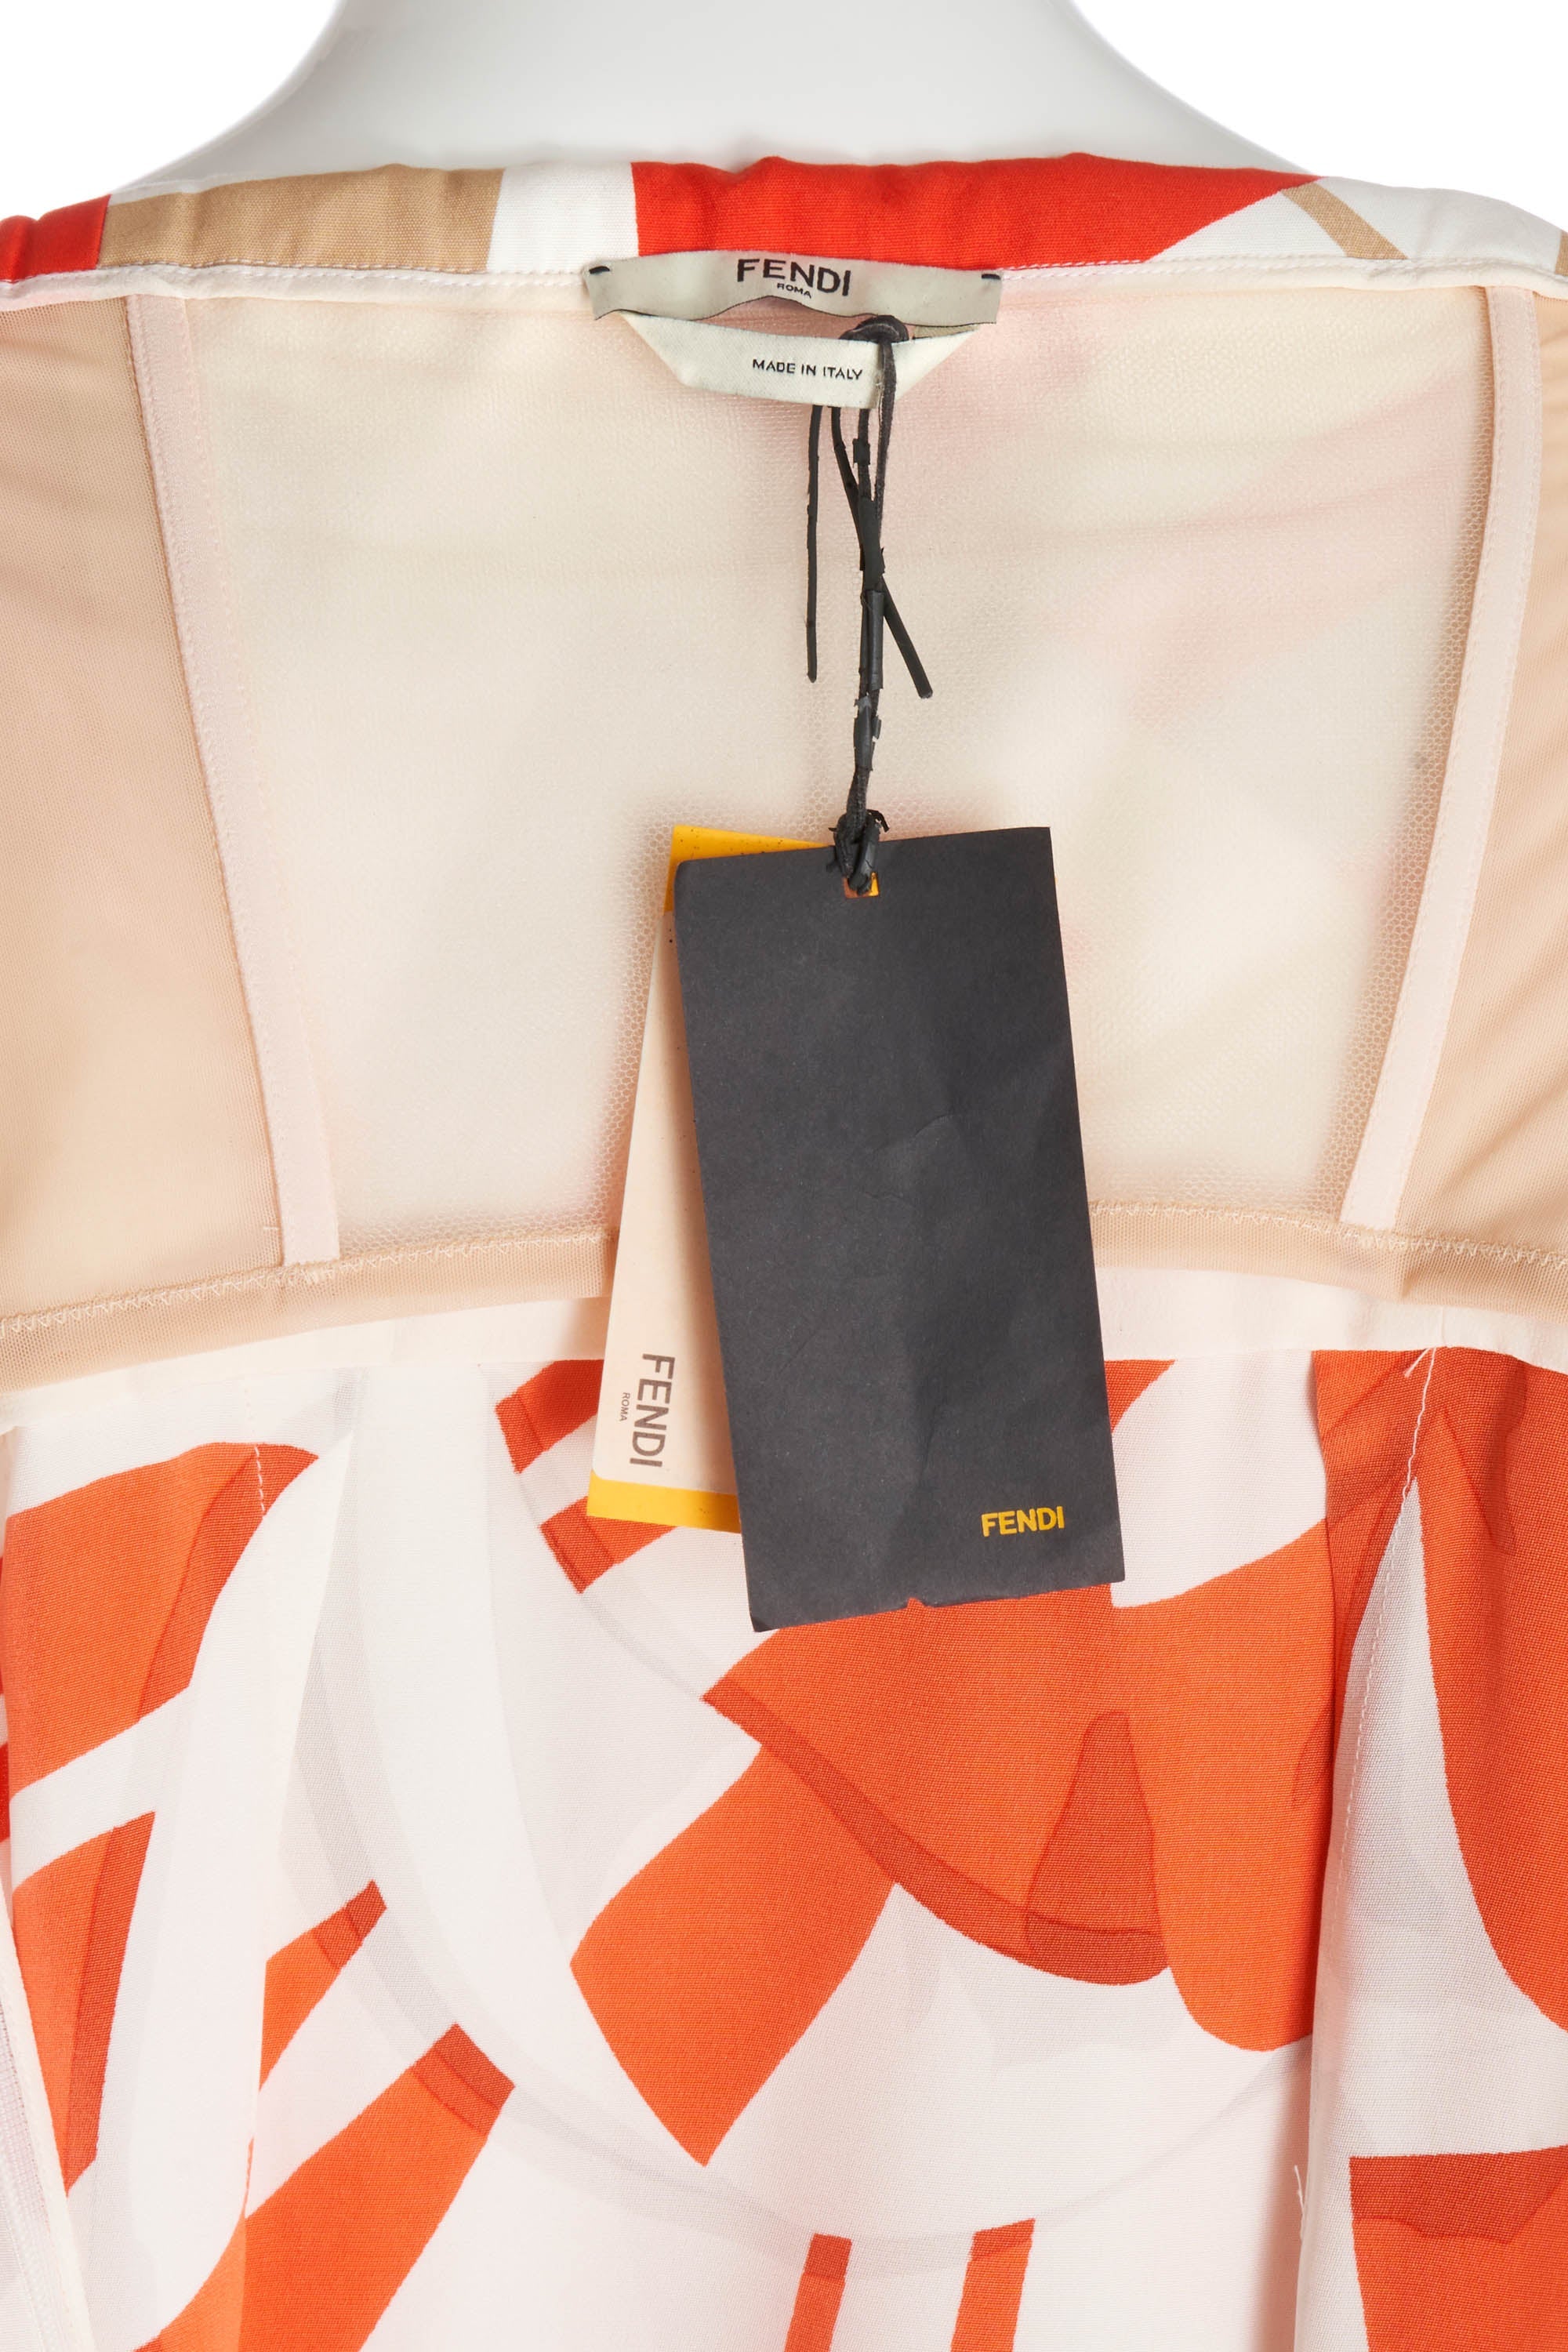 Fendi Abito Fragment 3D Strapless Gown 2014 - Foxy Couture Carmel